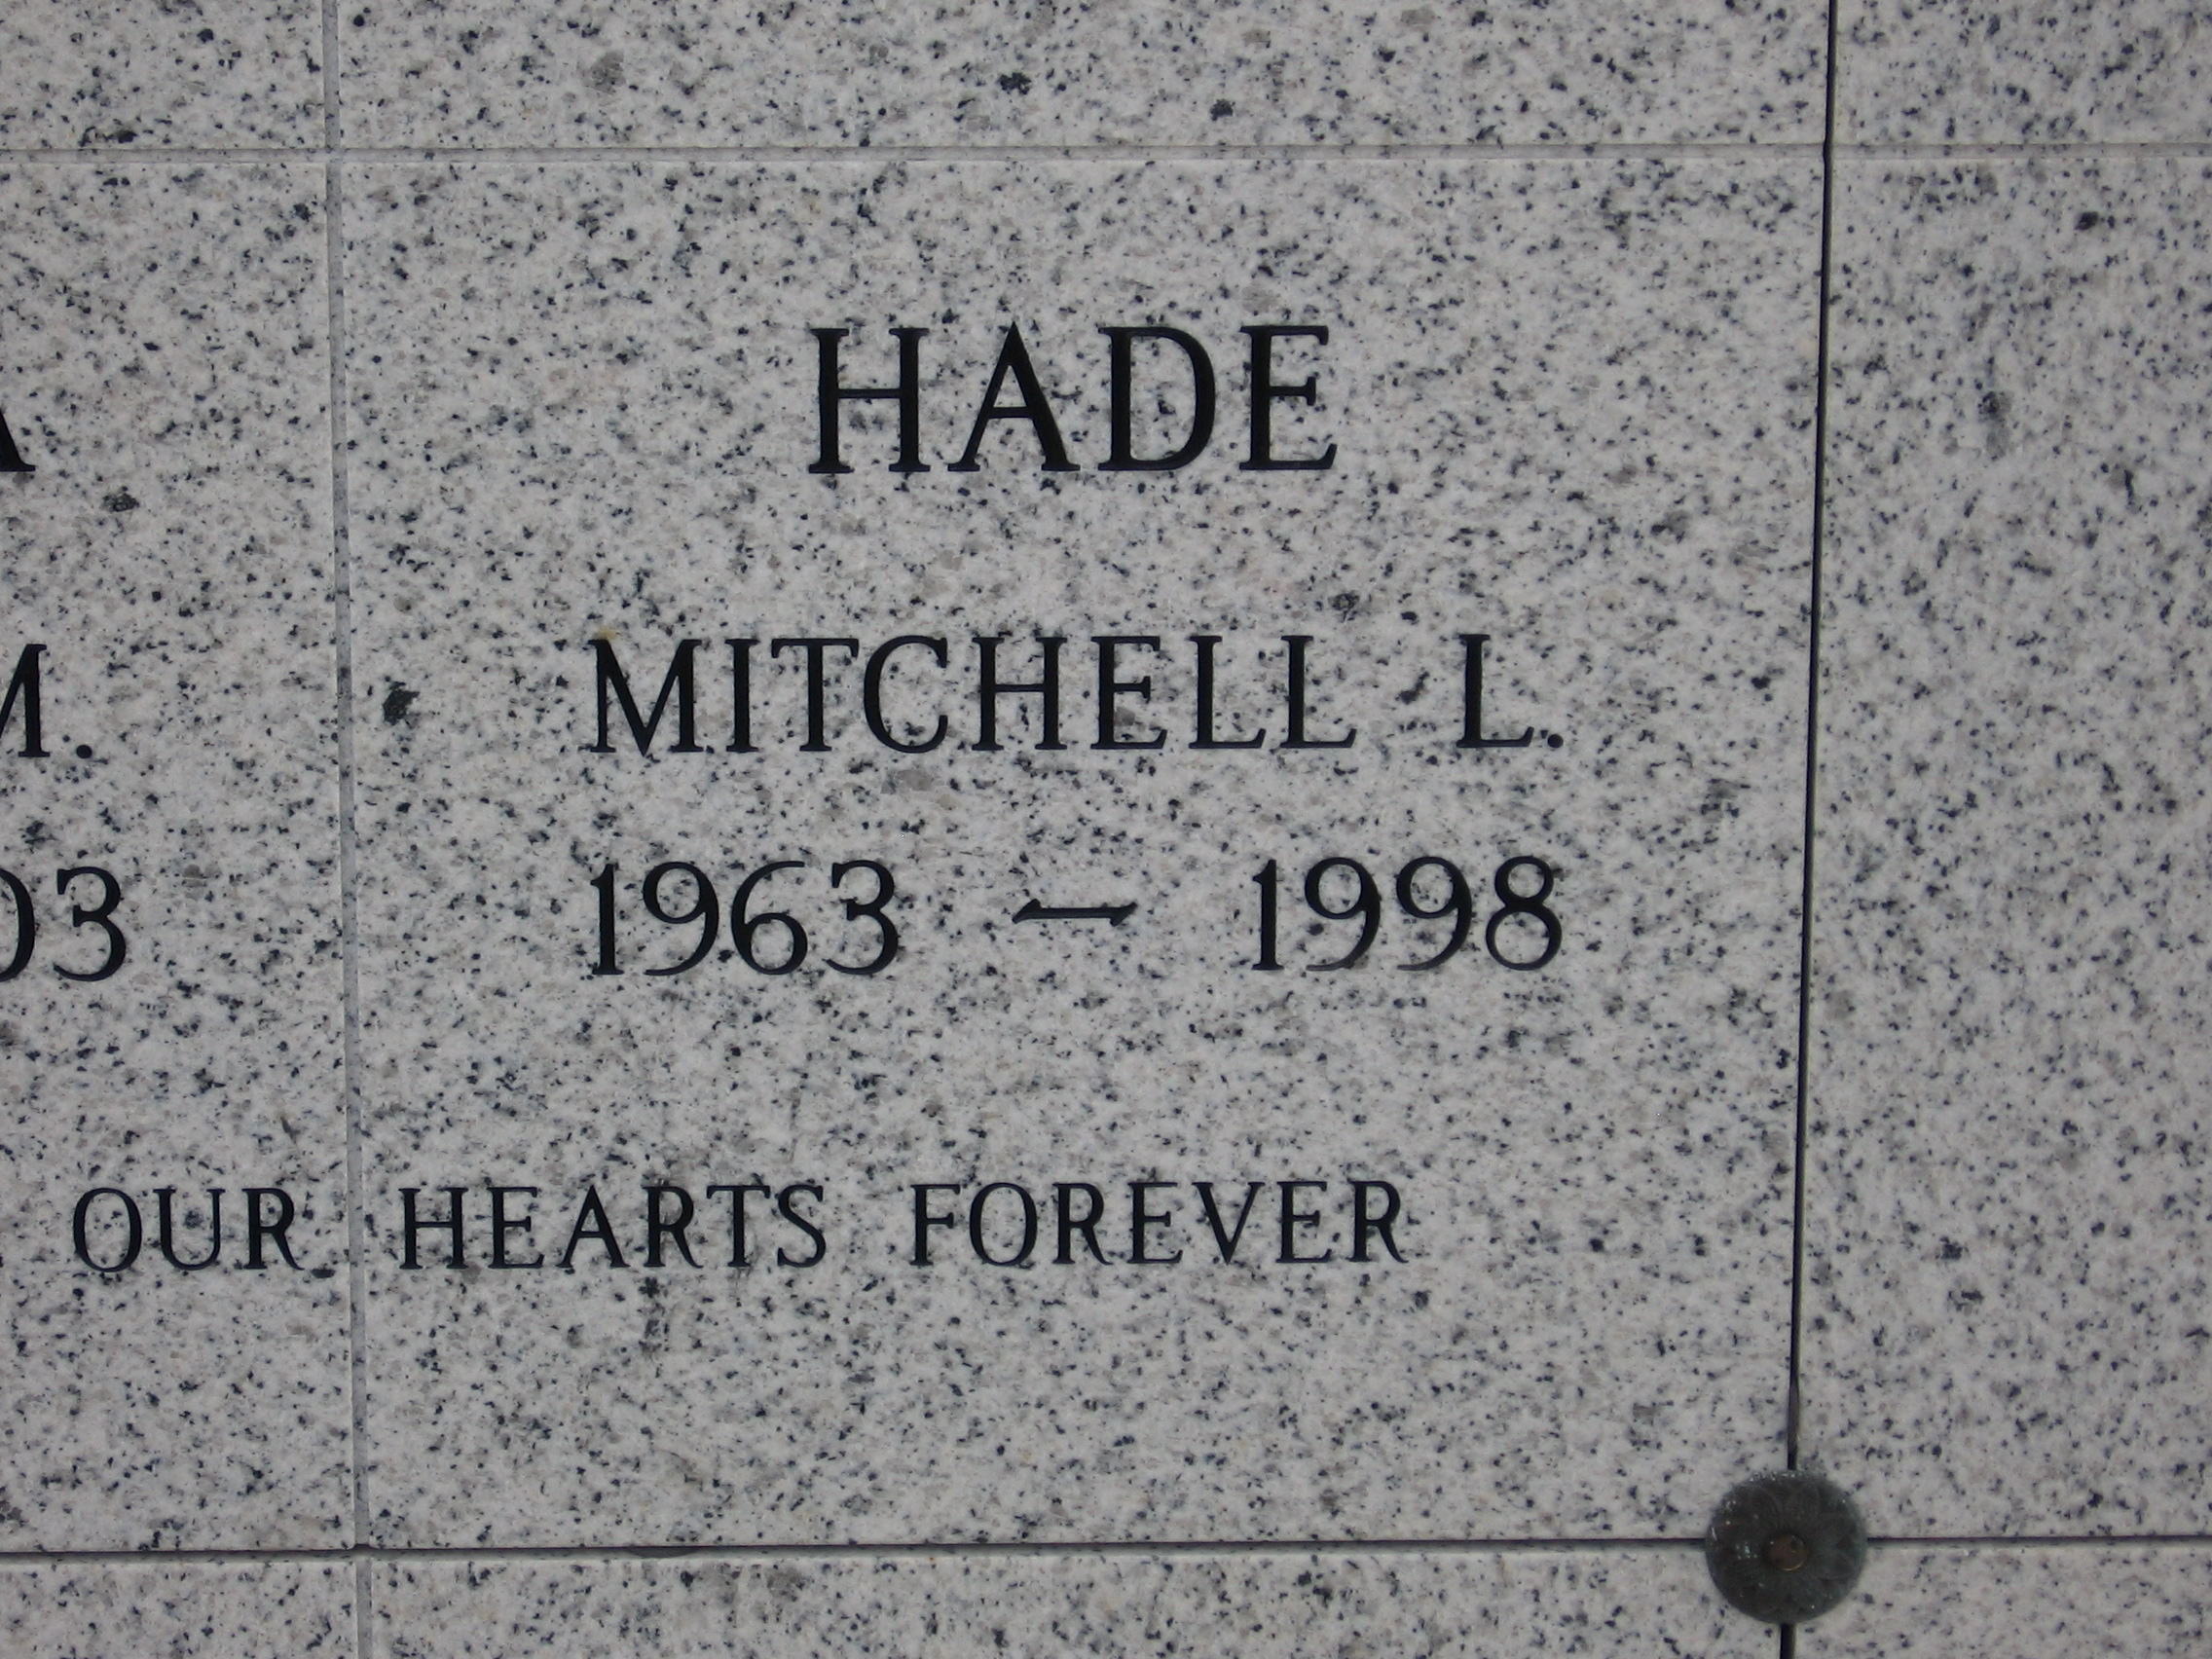 Mitchell L Hade